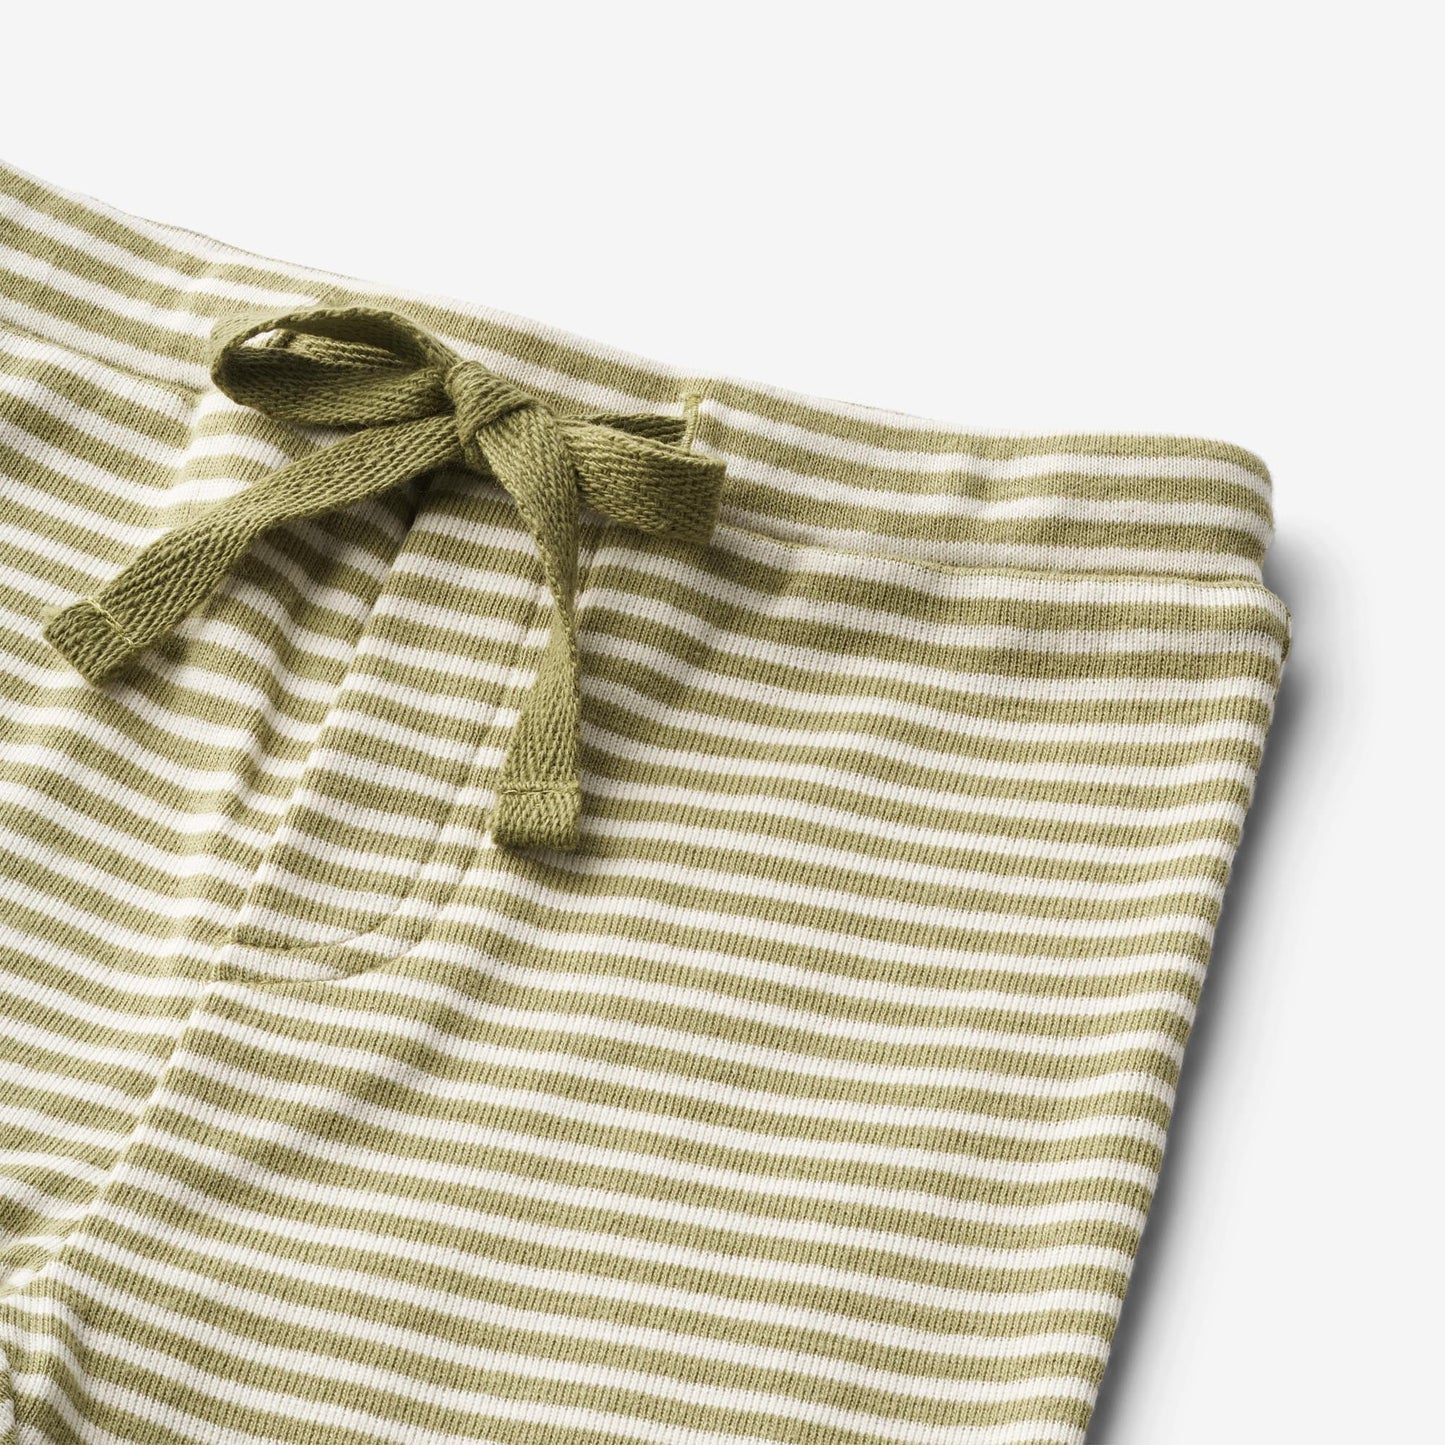 Wheat 'Manfred' Jersey Baby Pants - Sage Green Stripe